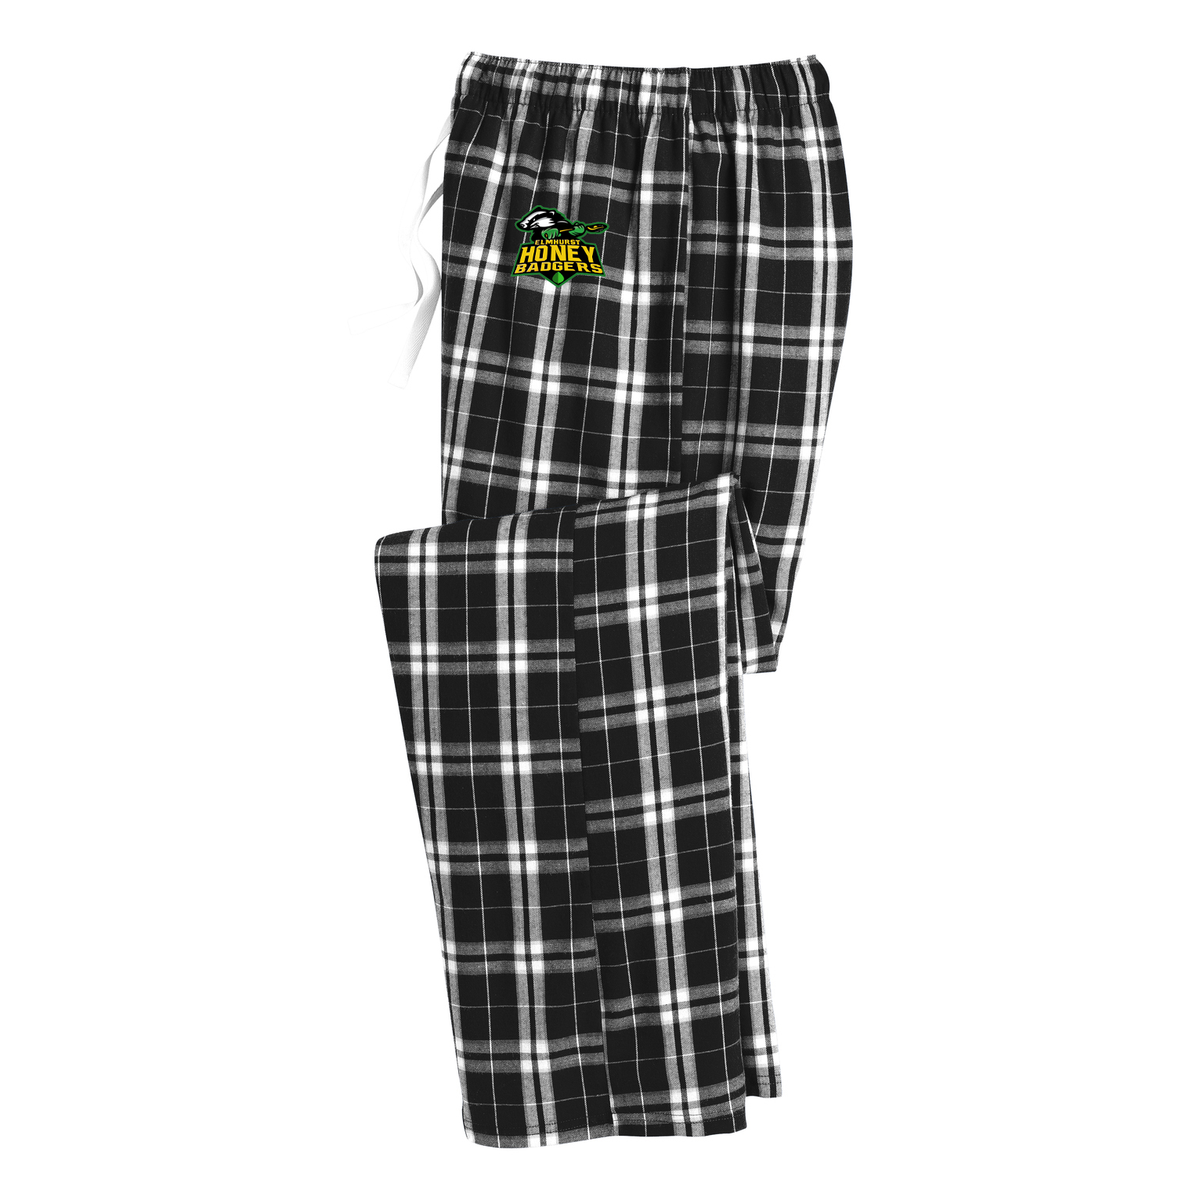 Honey Badgers Lacrosse Plaid Pajama Pants